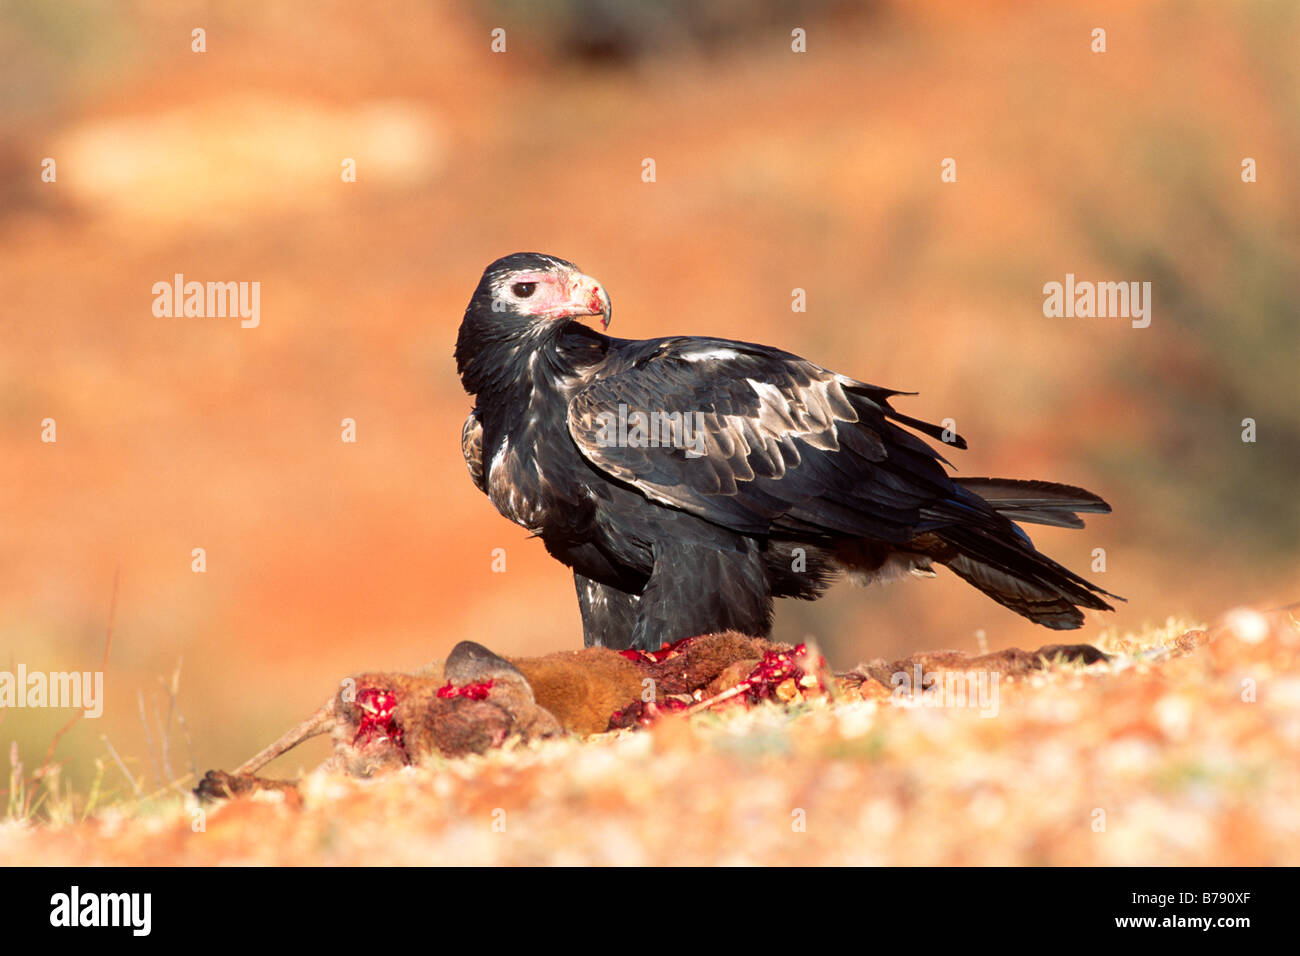 Wedge-tailed Eagle, Eaglehawk (Aquila audax) on its prey, Southern Australia, Australia Stock Photo